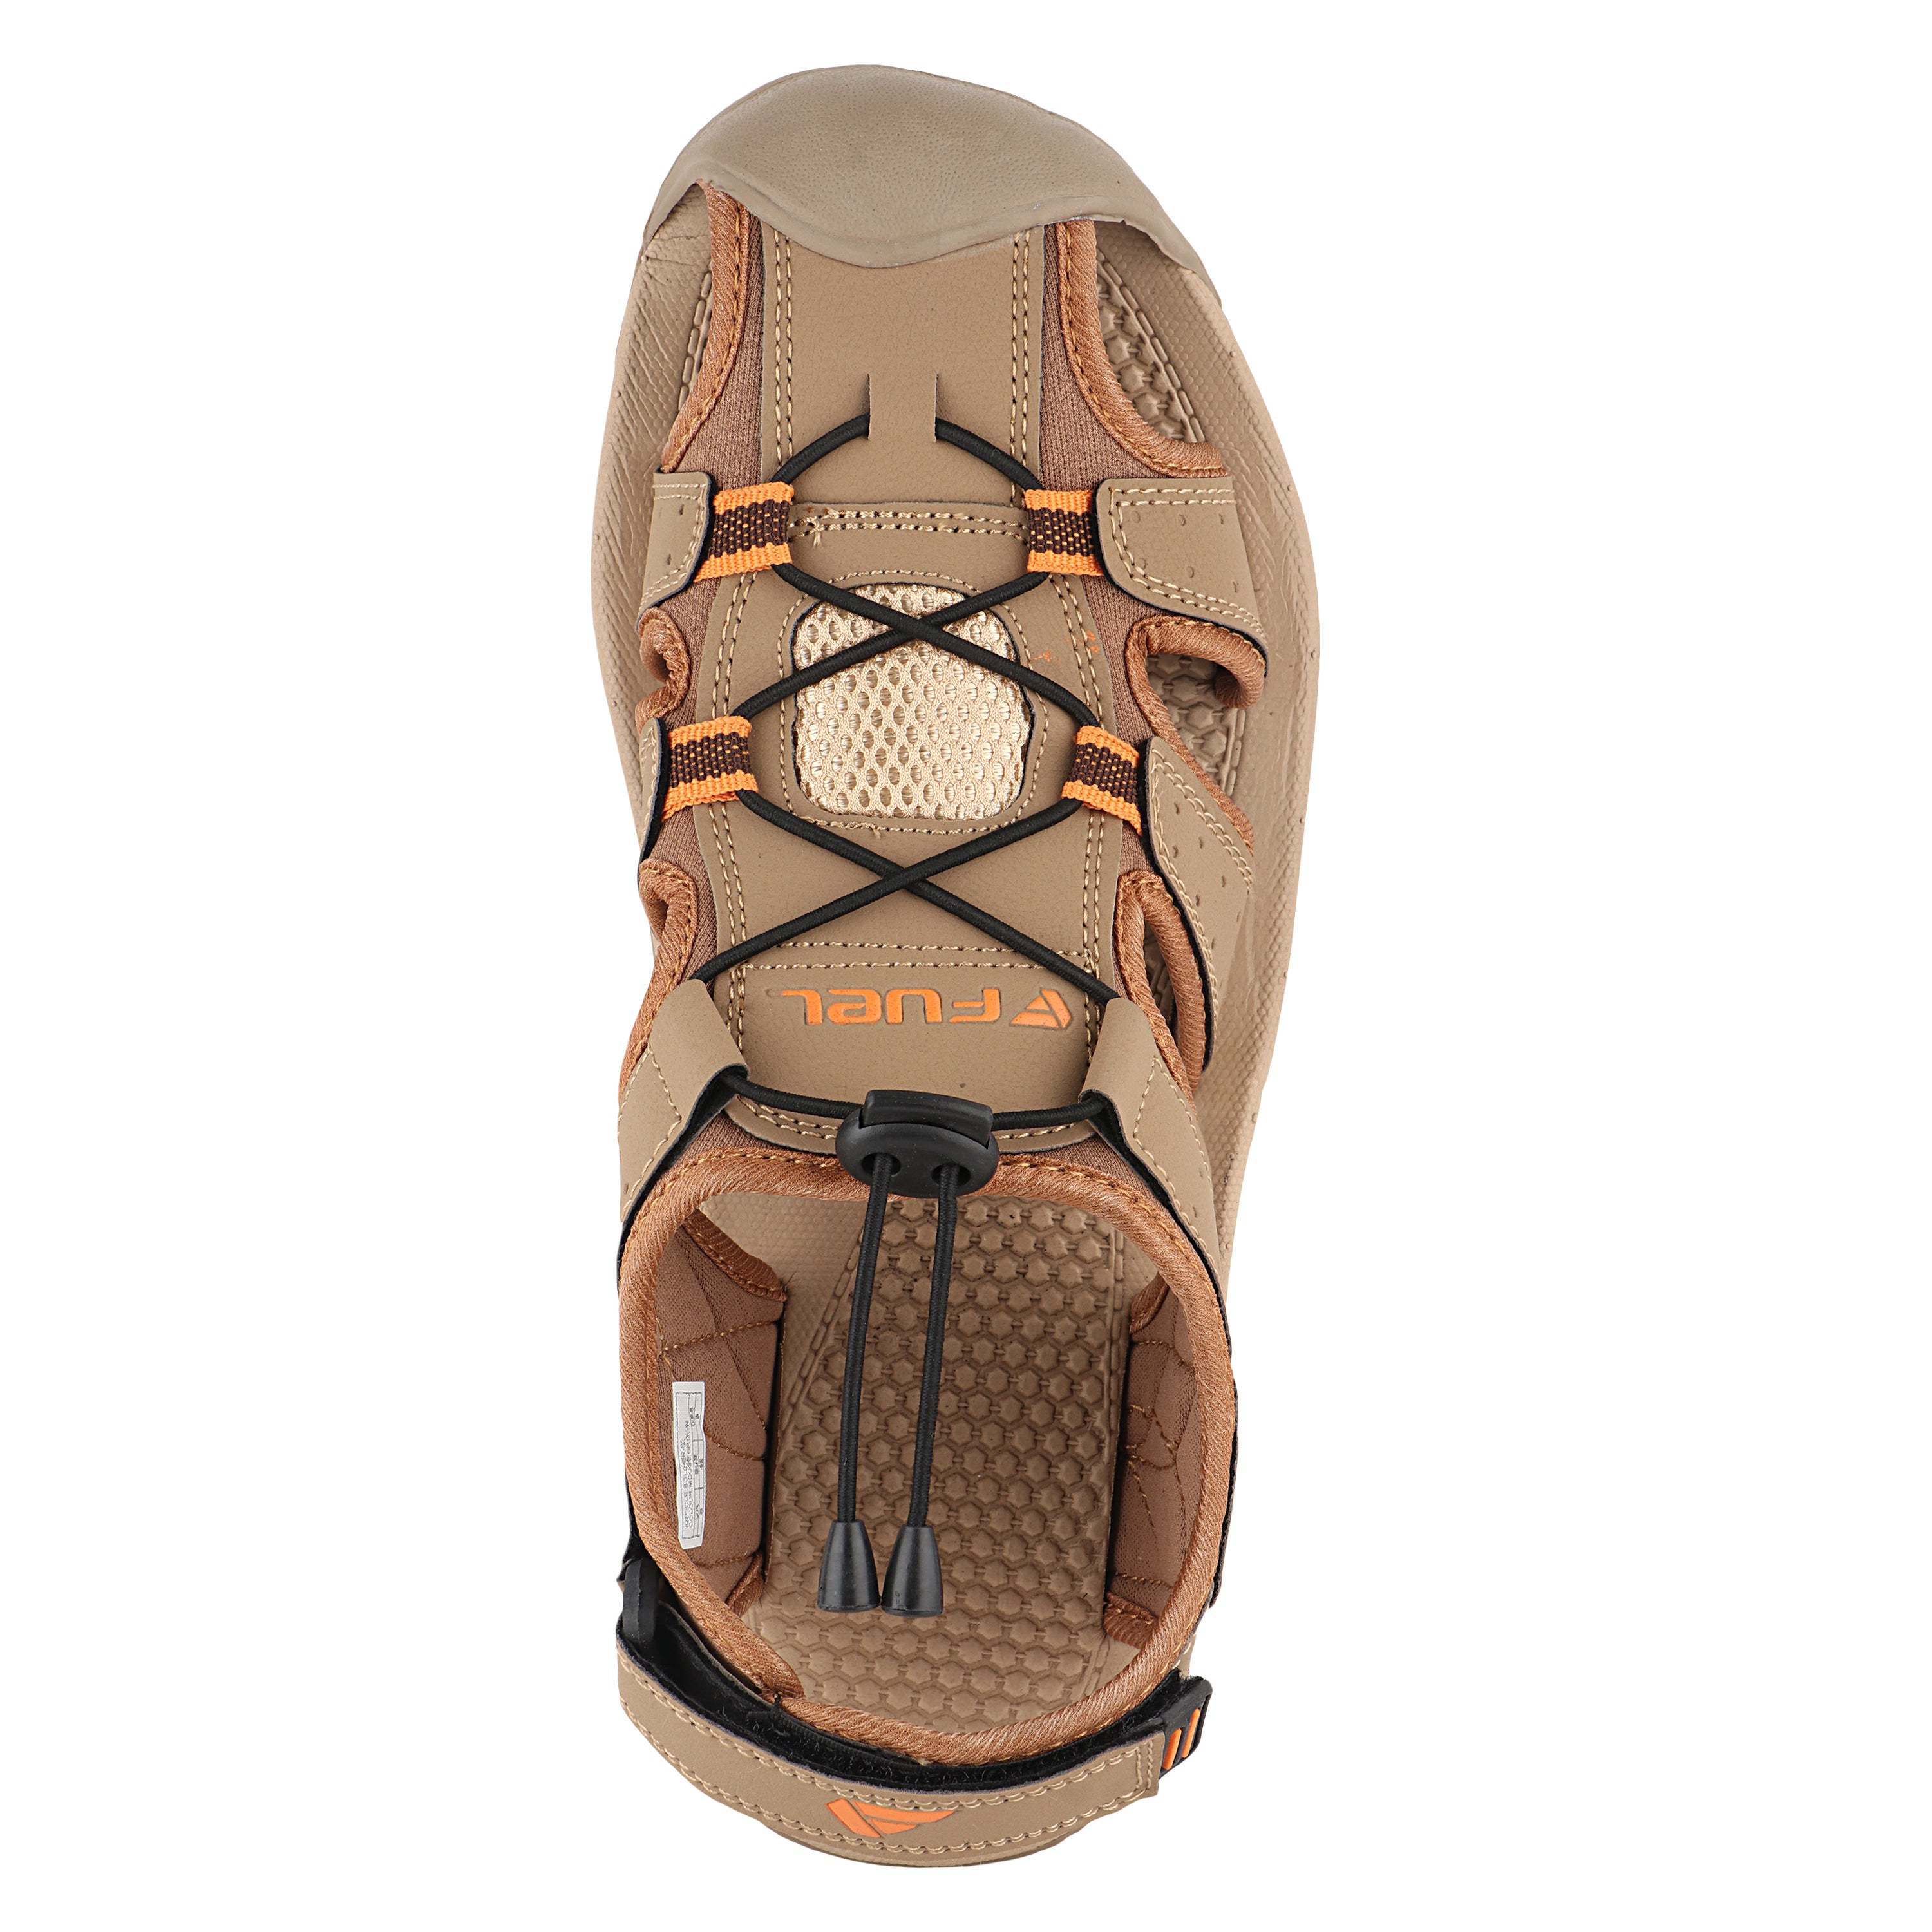 Fuel Soldier-02 Fisherman Sandals for Men (Beige-Orange)